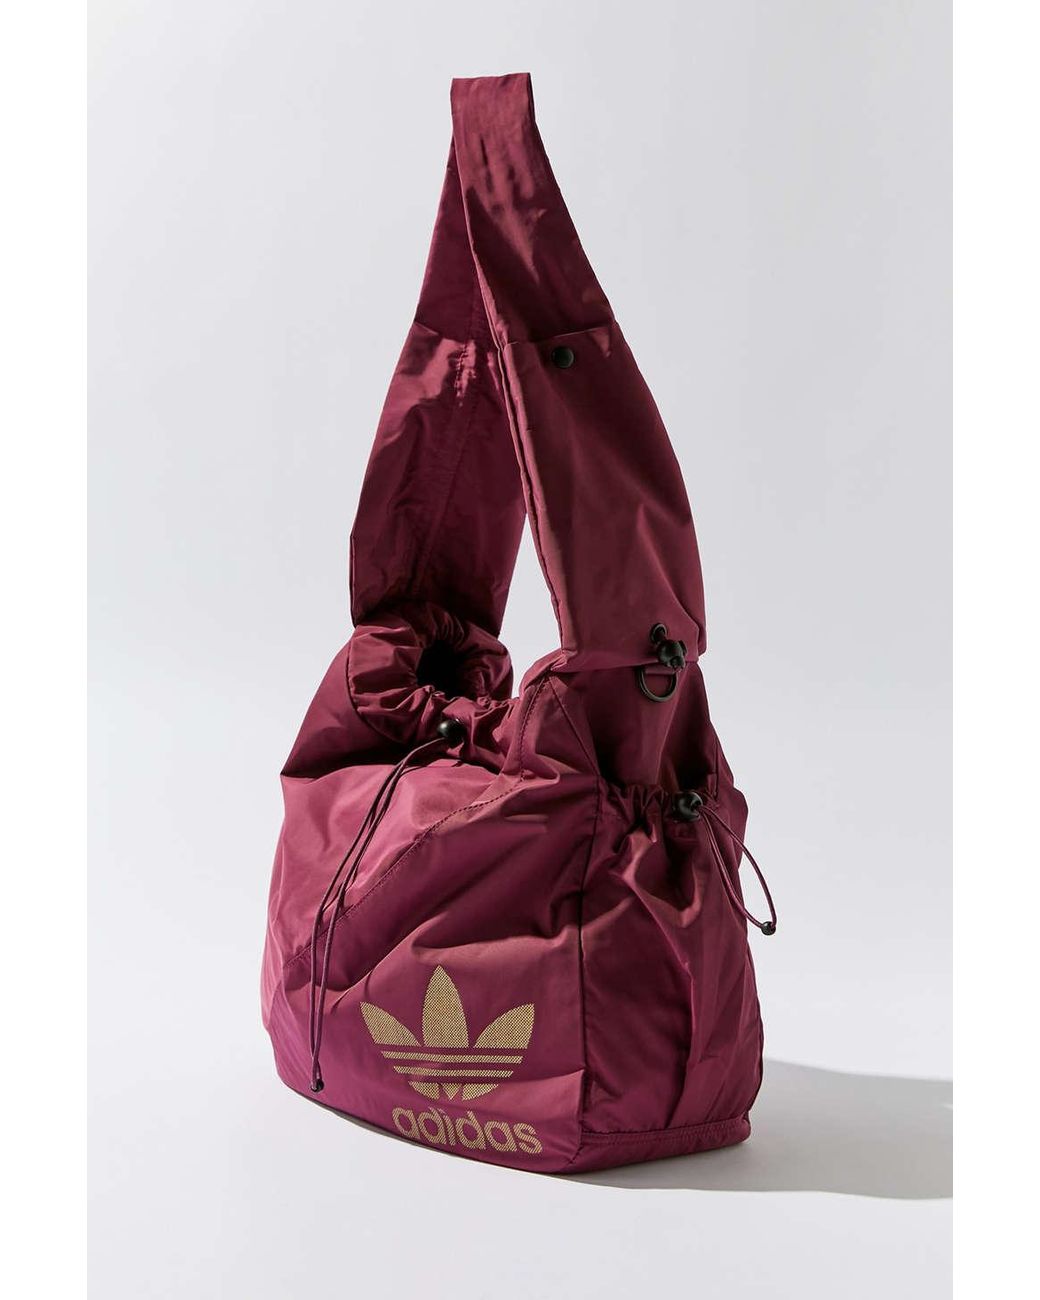 adidas) Adidas Tote Bag in Purple